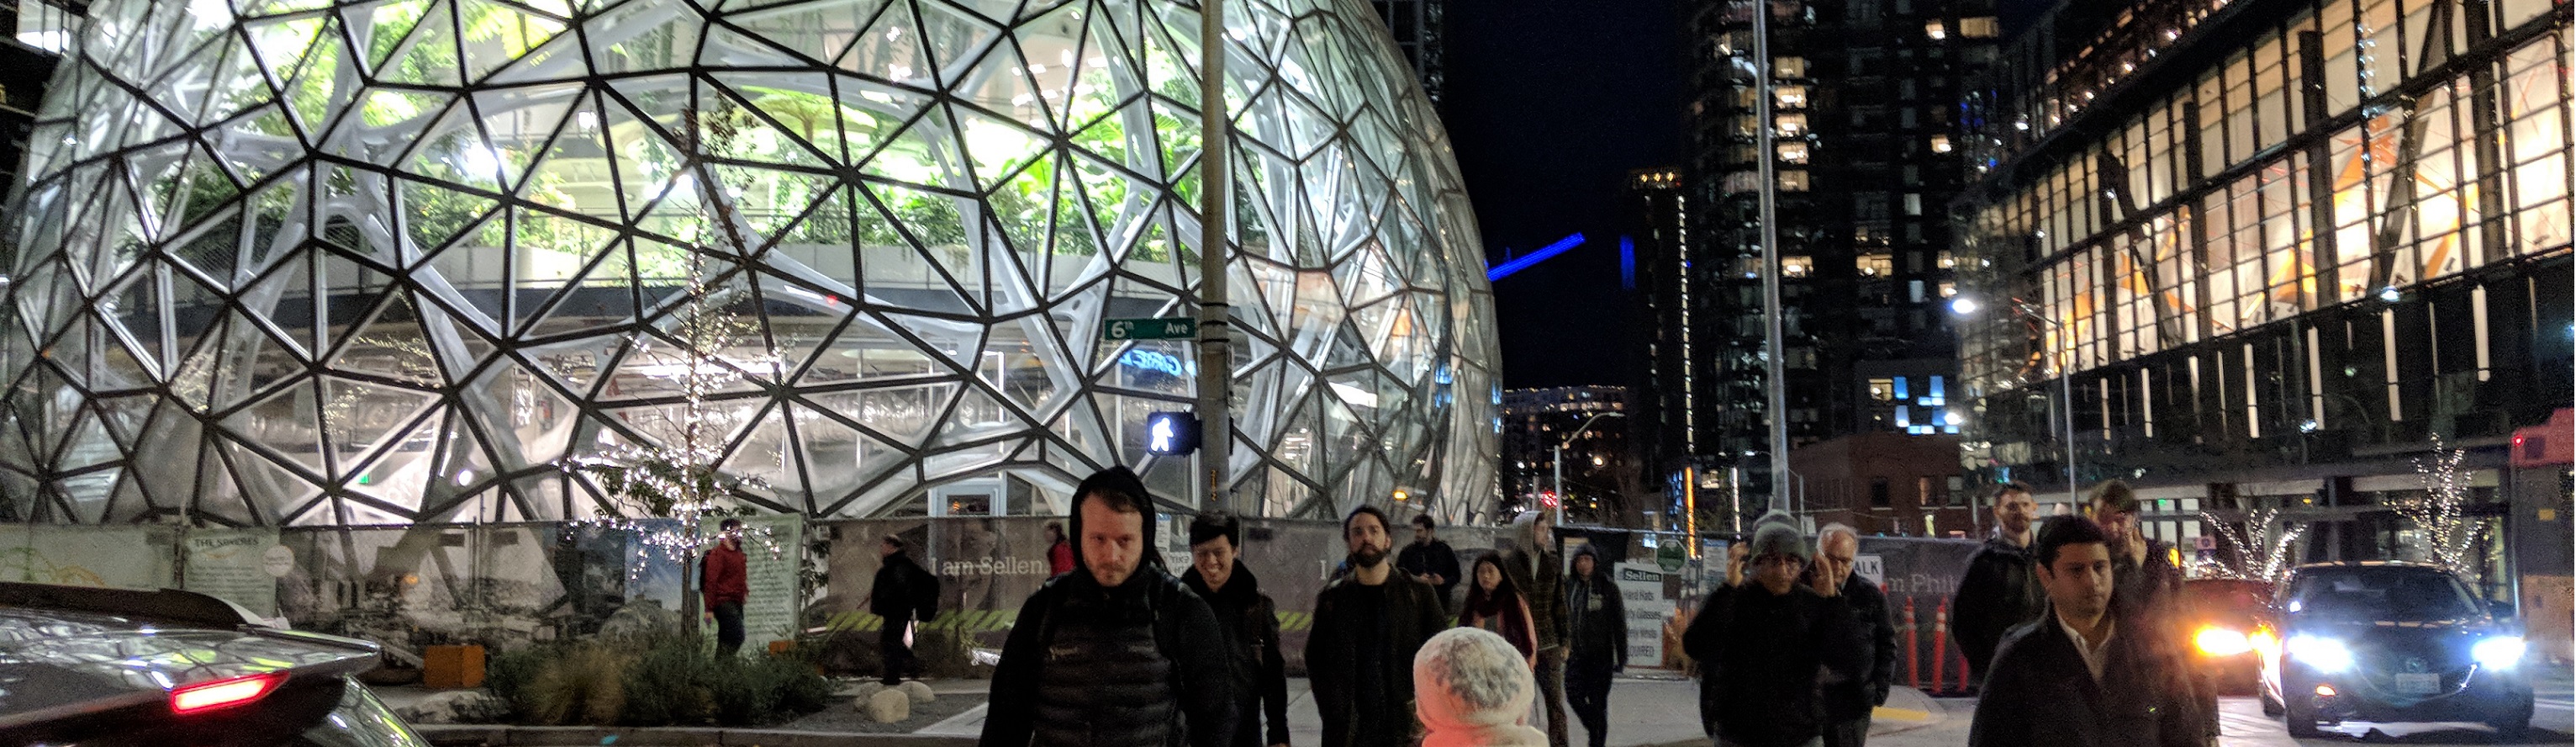 Amazon headquarters at night